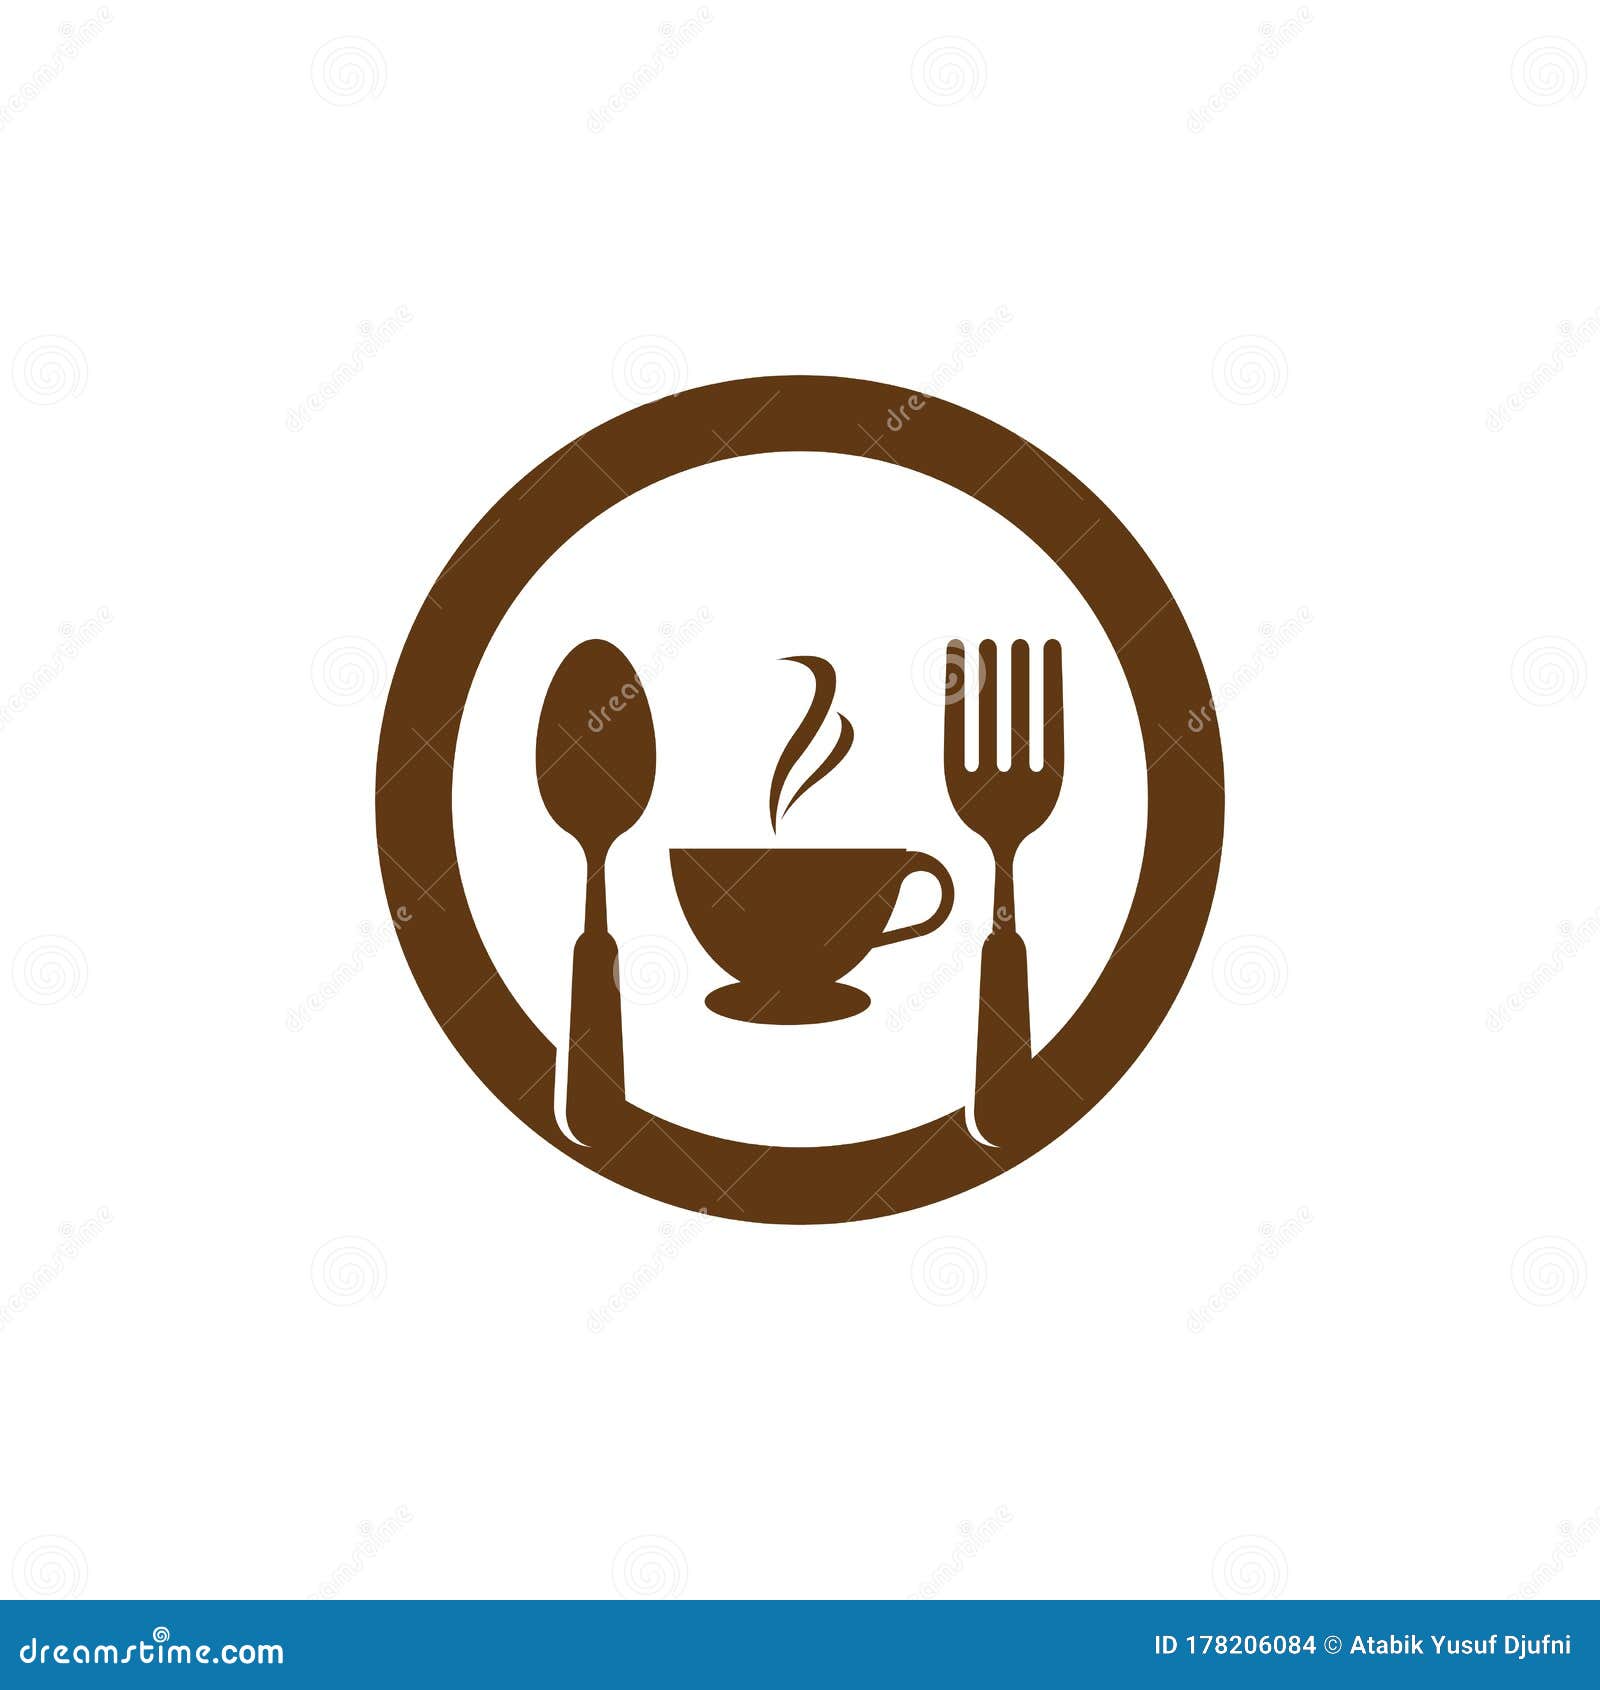 cafe & resto logo  icon